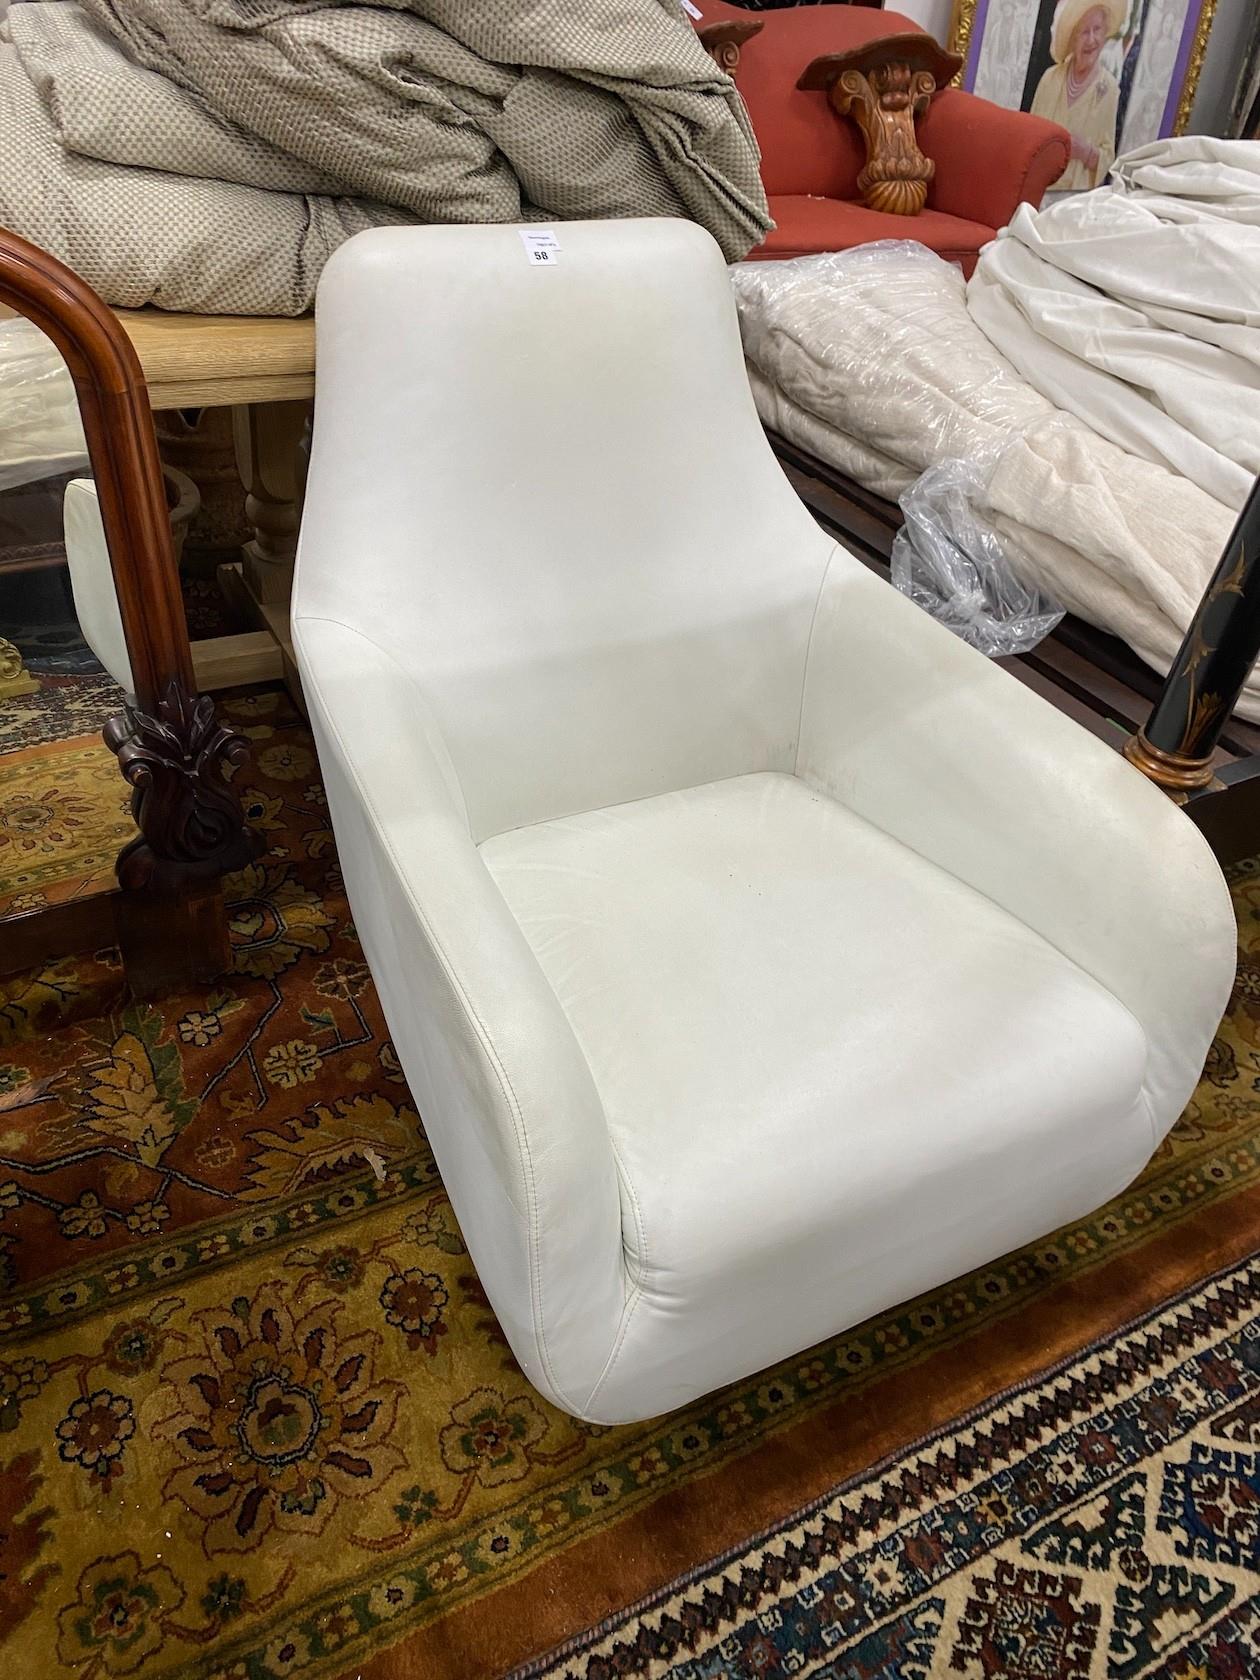 A Ligne Roset white leather armchair, width 70cm, depth 90cm, height 86cm